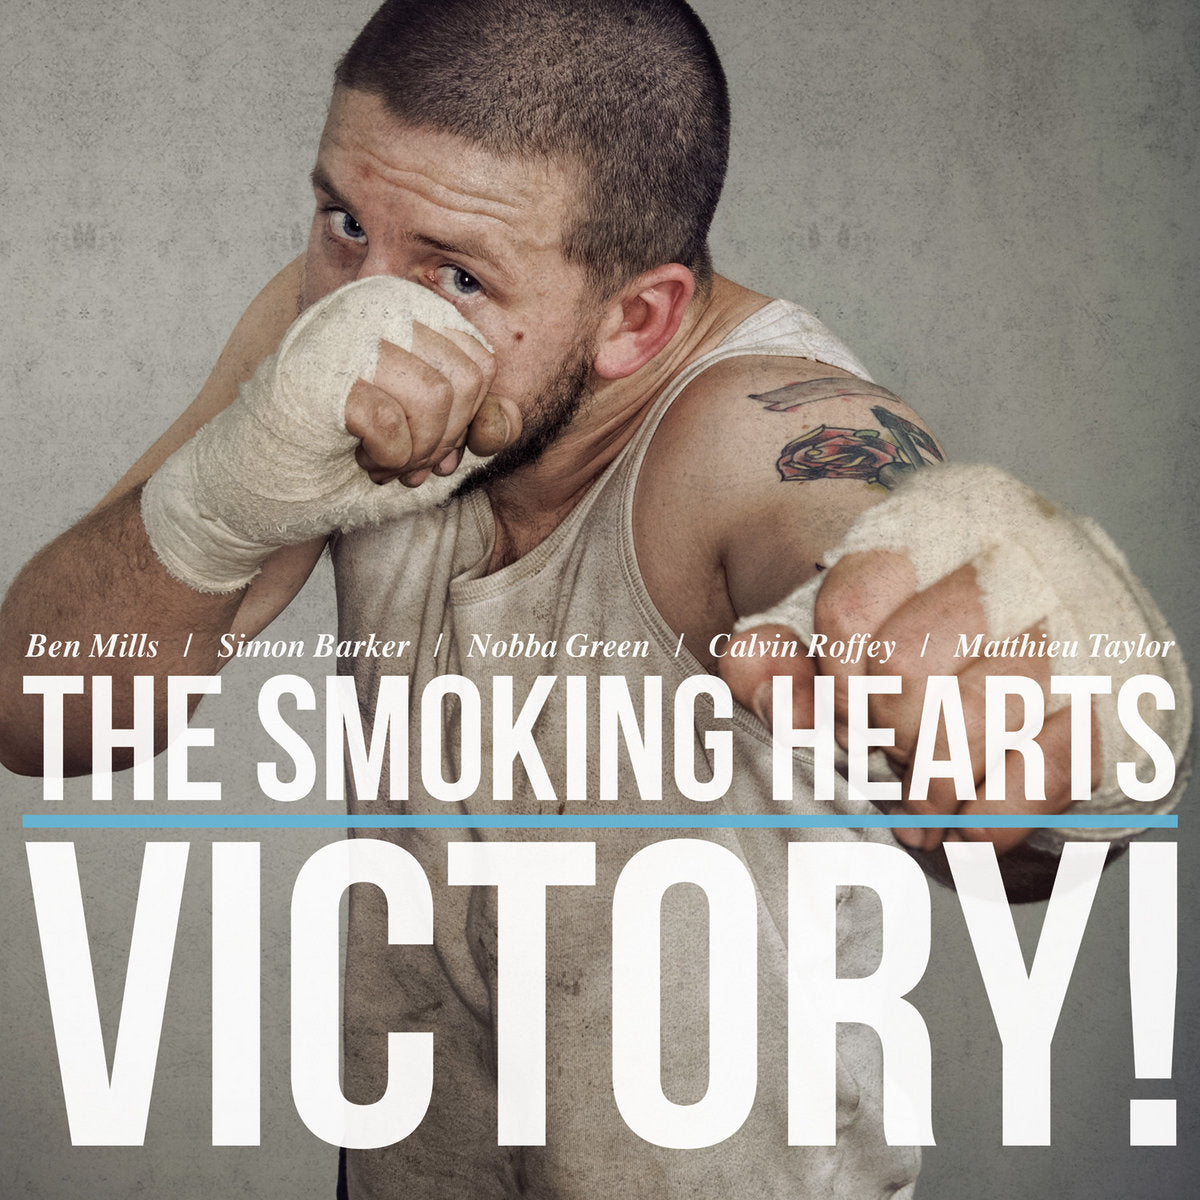 The Smoking Hearts "Victory!" CD